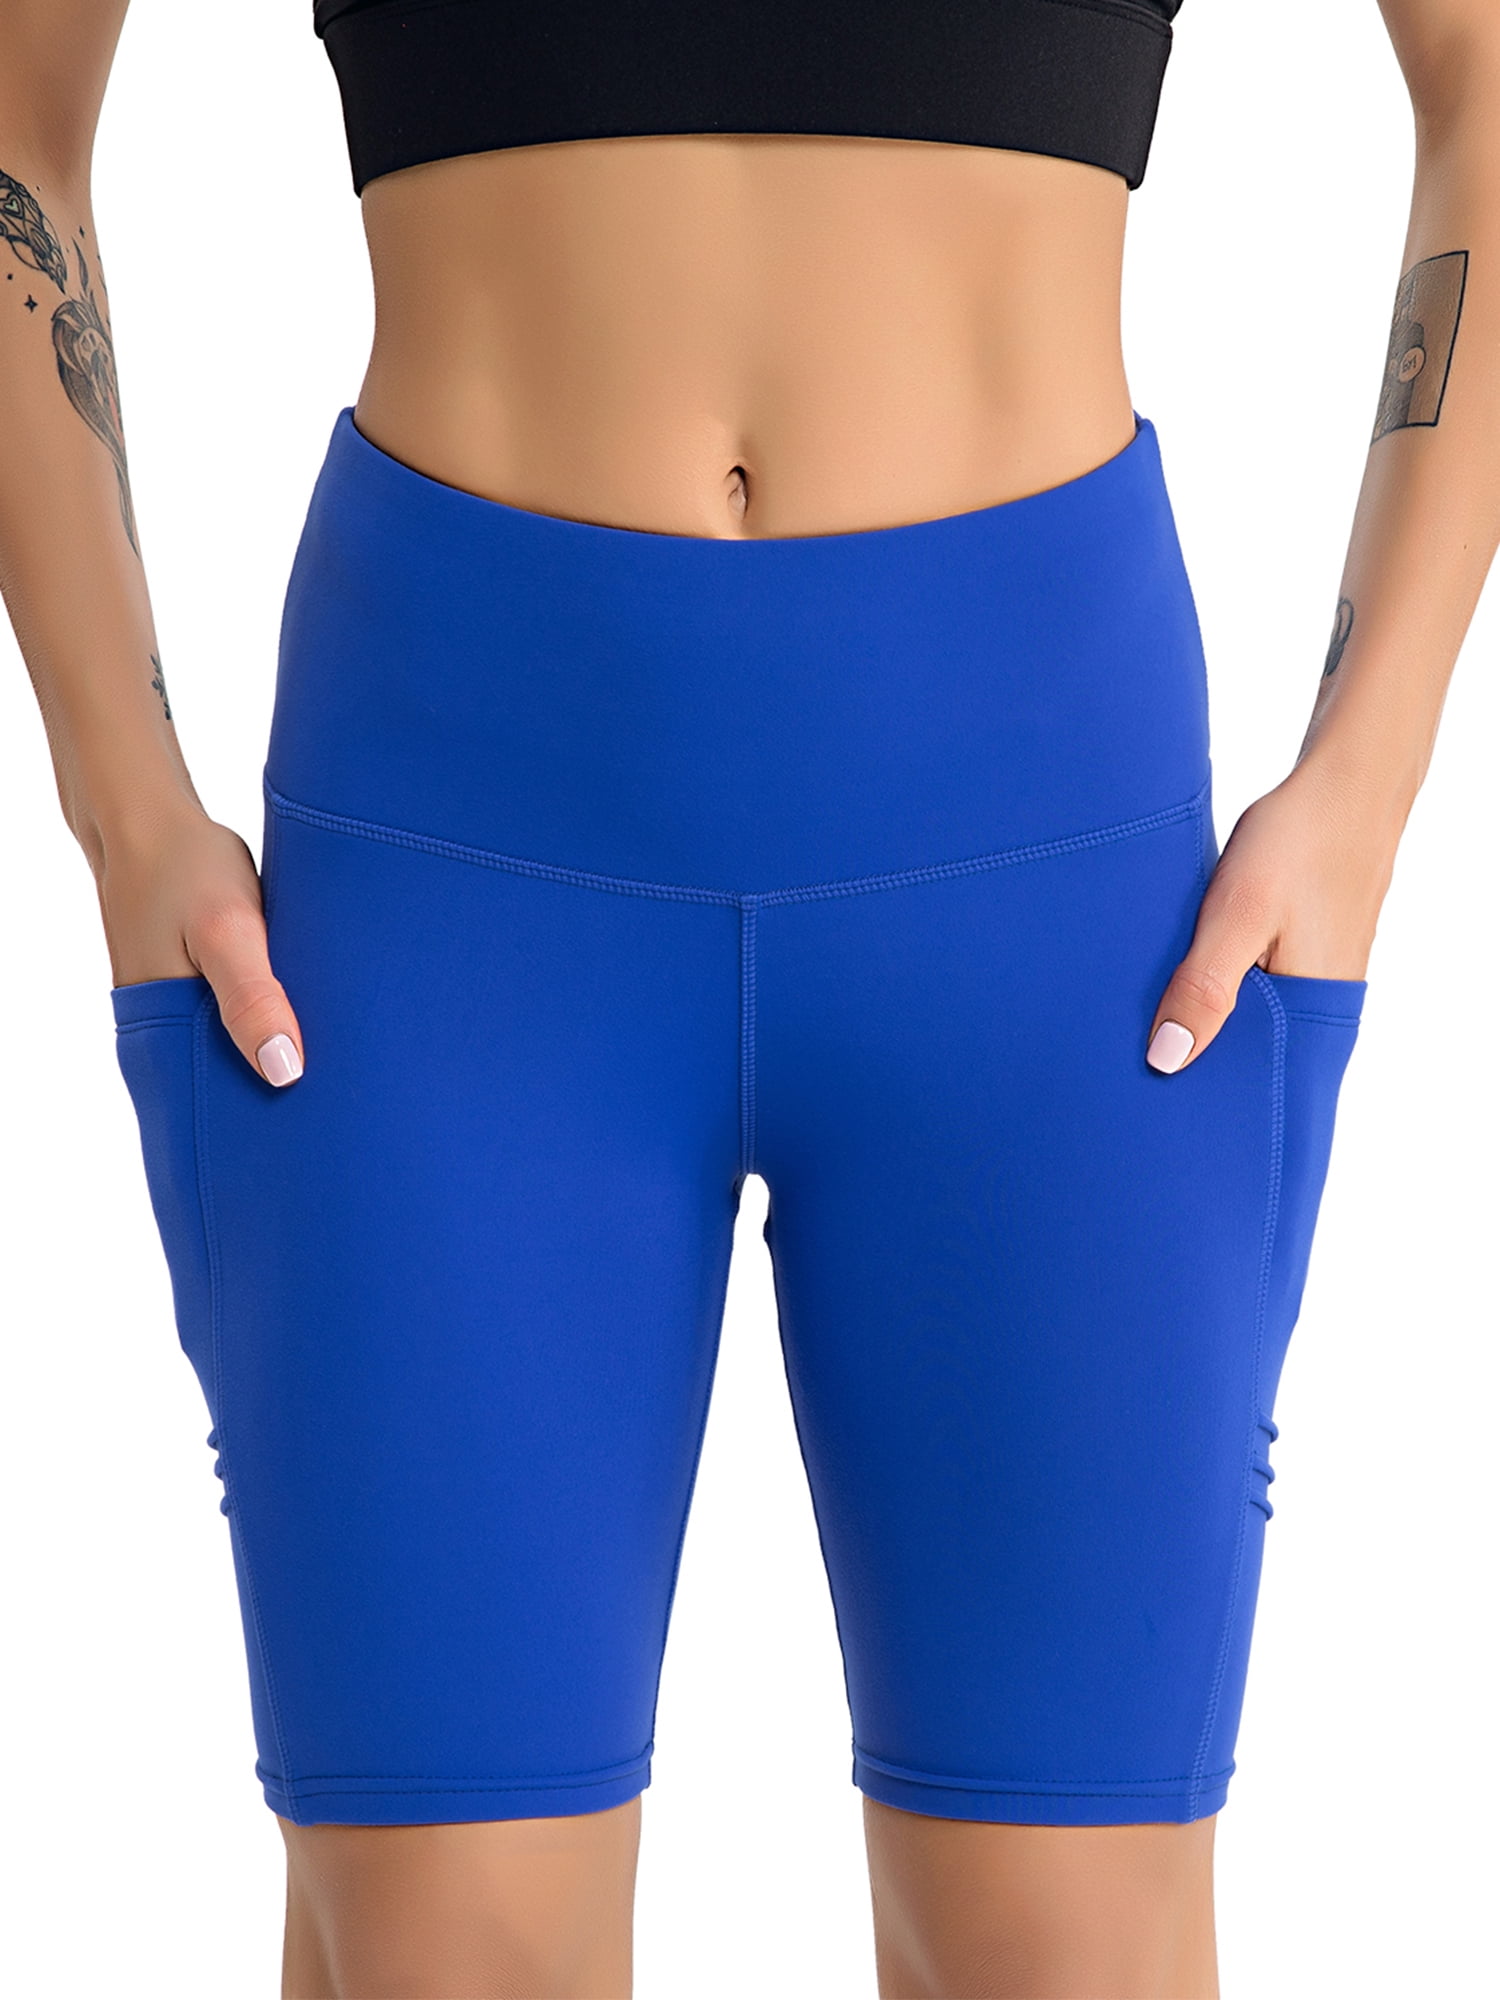 3AXE Womens 8 Yoga Shorts for Women High Waist Tummy Control Girls Workout Running Uniform Pants Side Pockets